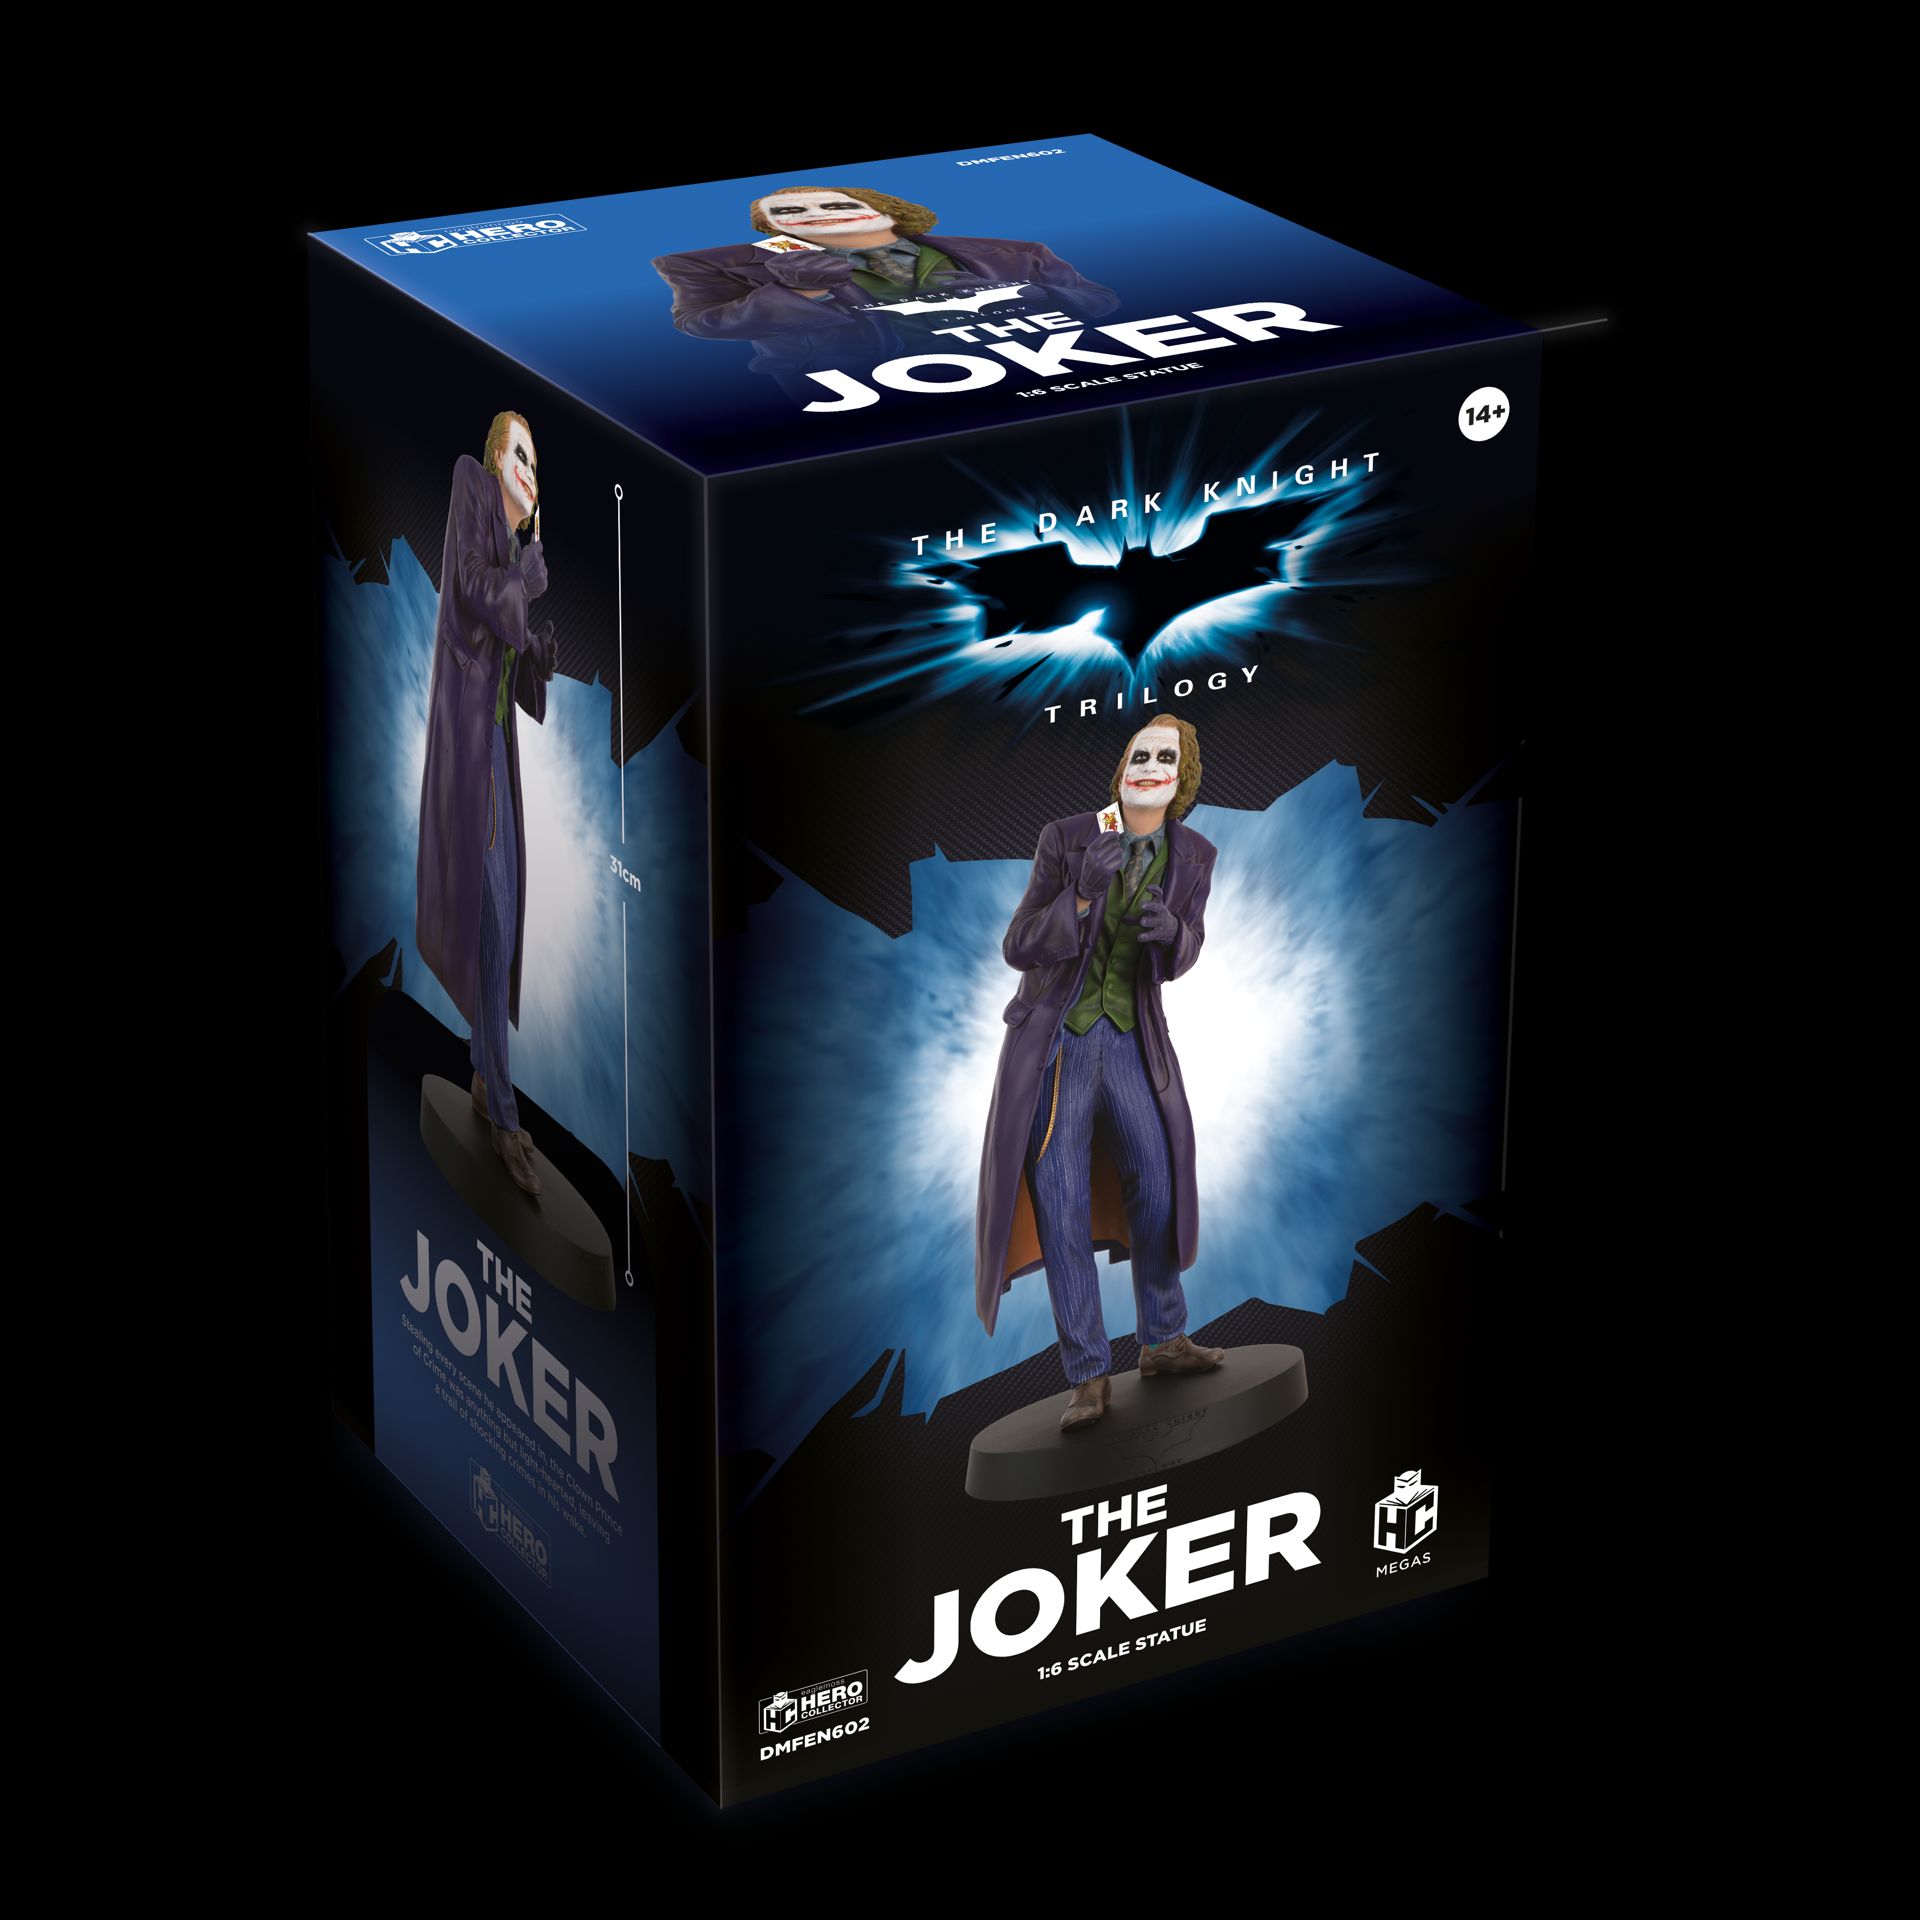 Acheter Batman Movie - The Dark Knight film The Joker mega standbeeld -  Figurines prix promo neuf et occasion pas cher